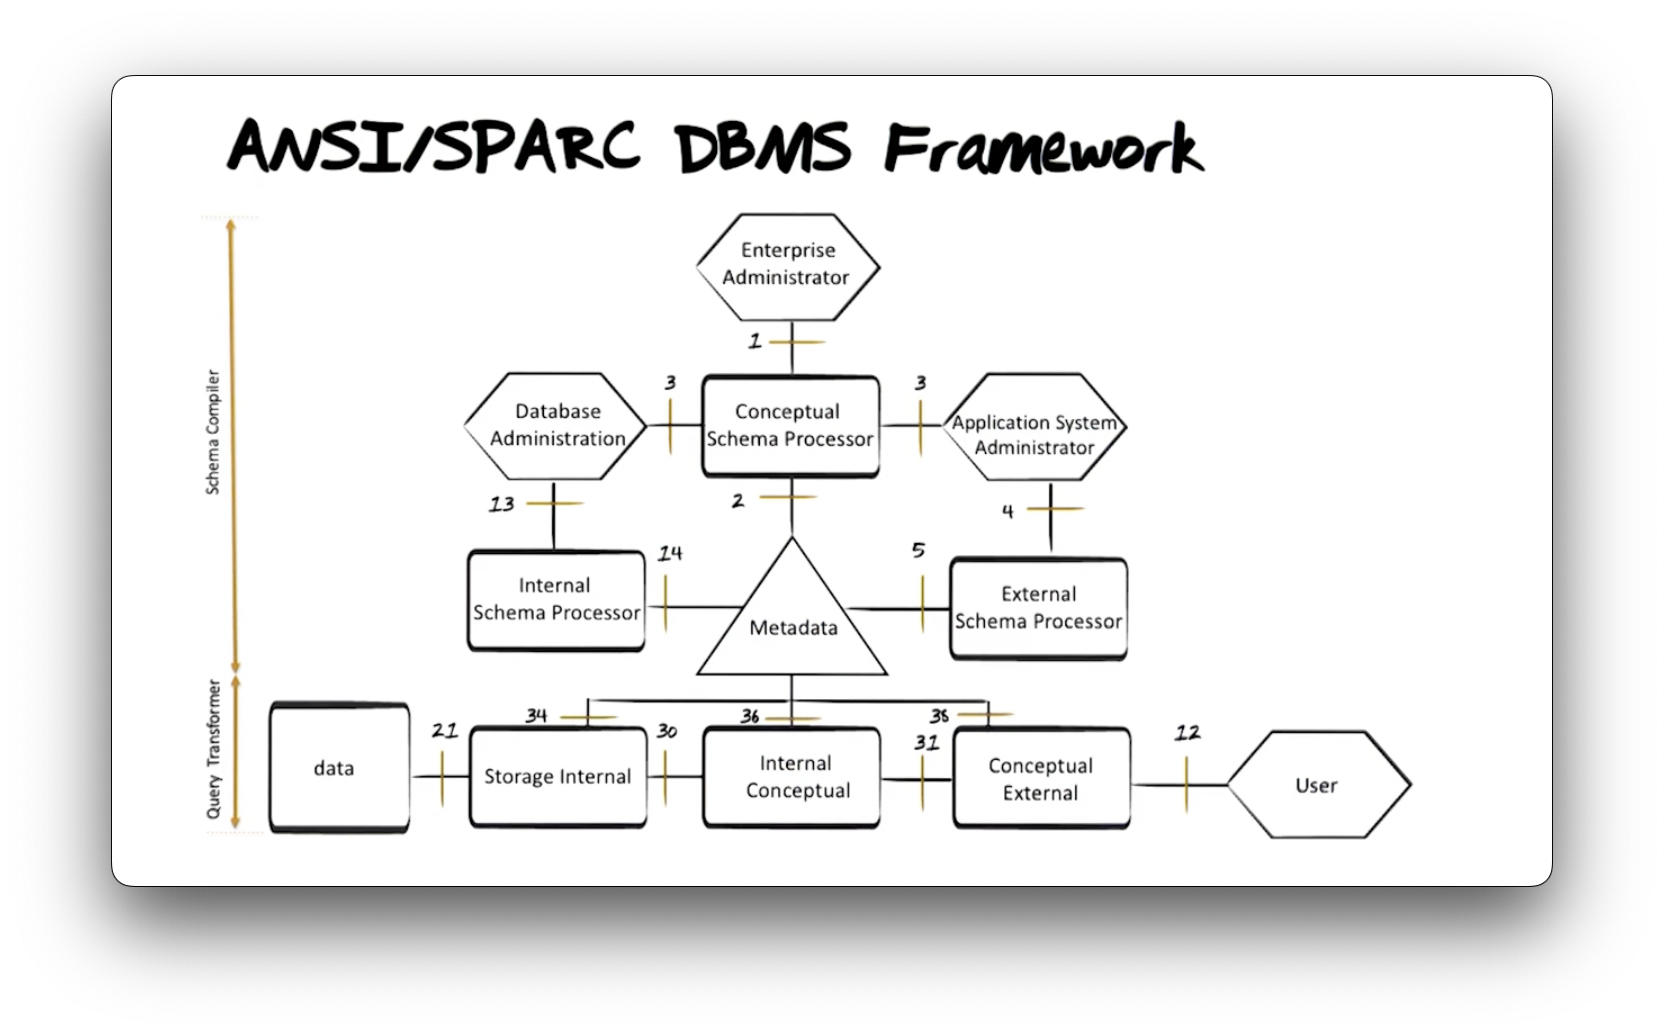 The ANSI/SPARC DBMS Framework.